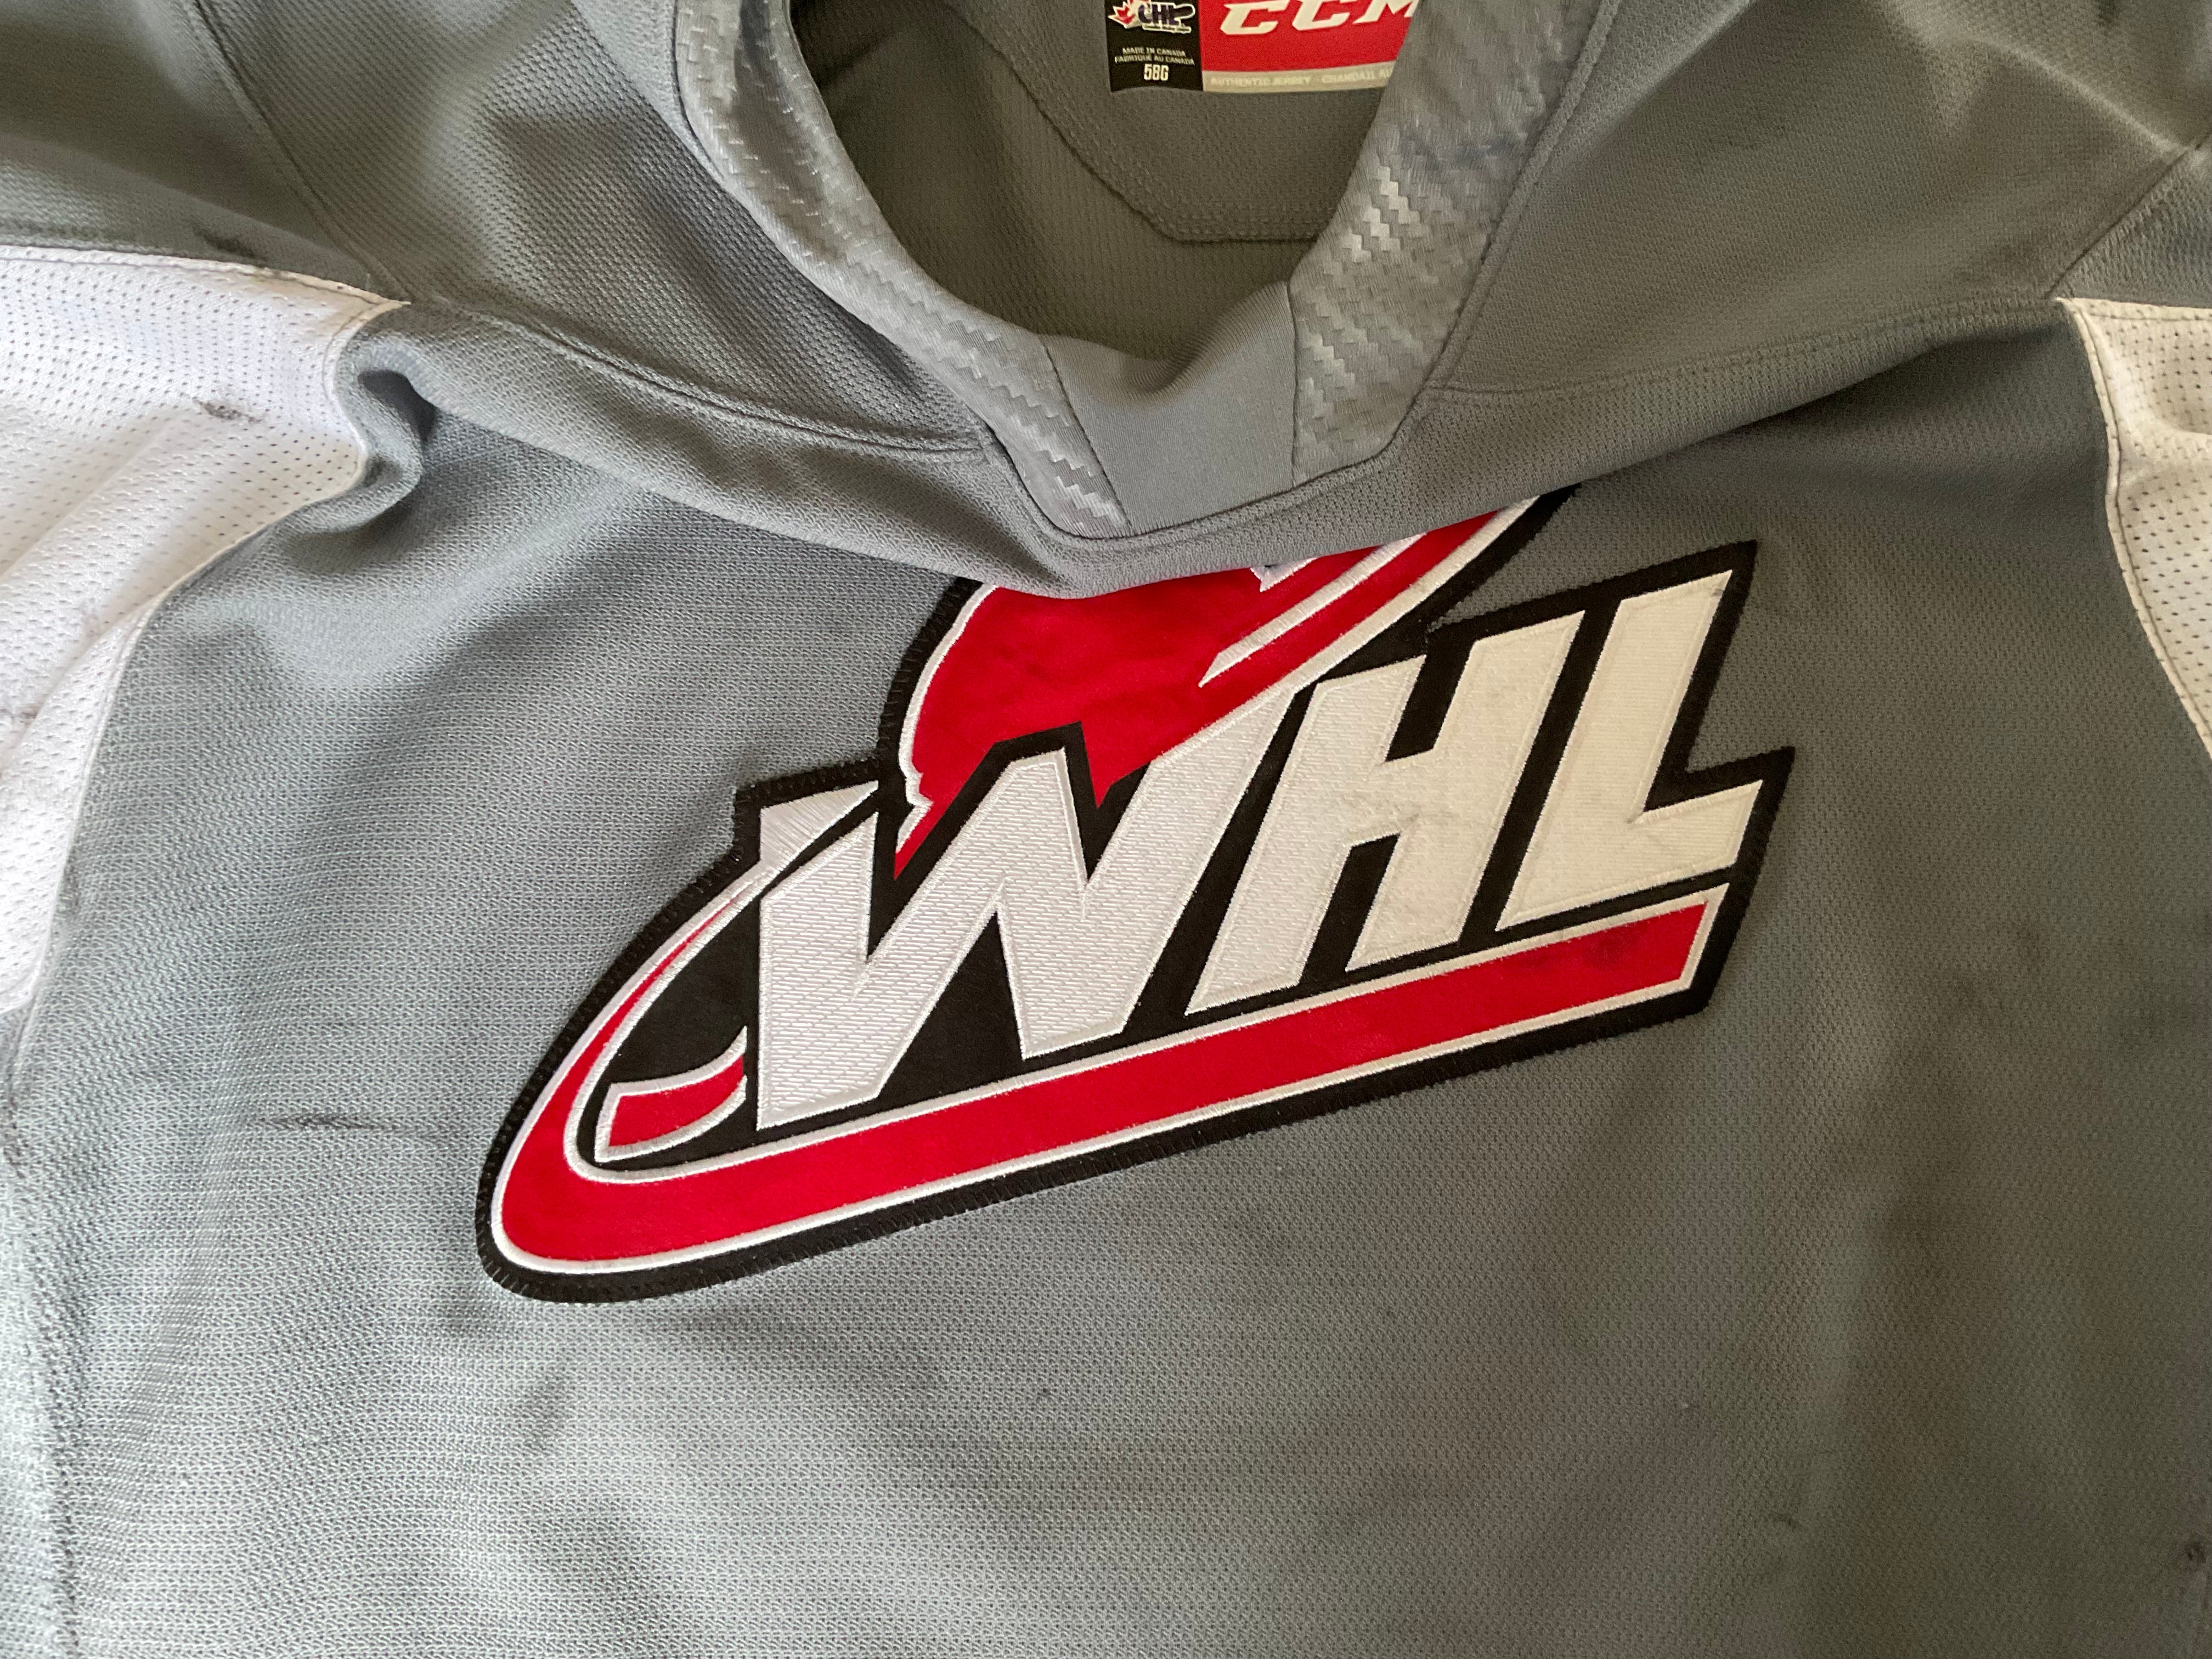 WHL Practice jersey